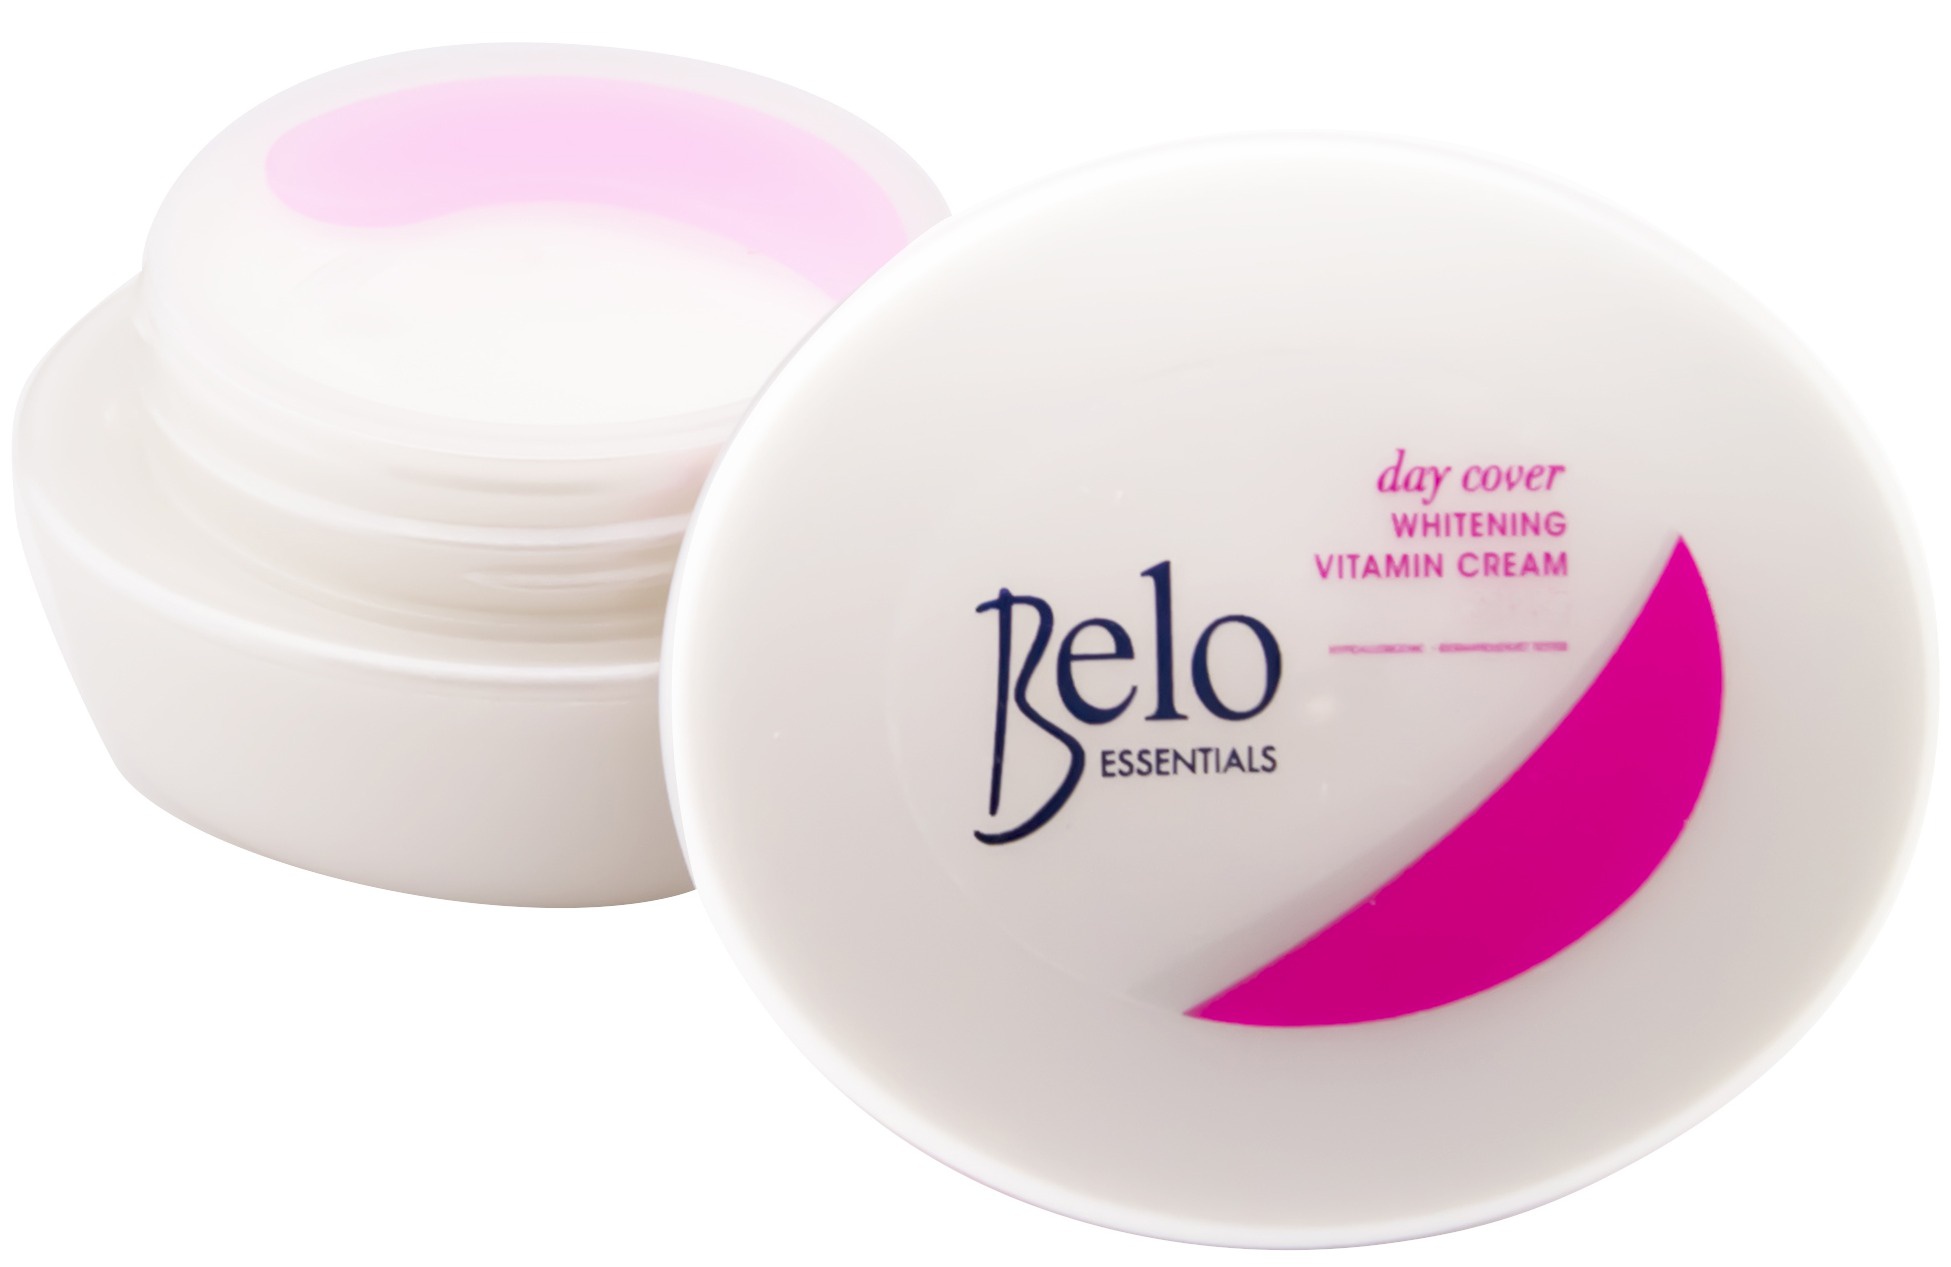 Belo Essentials Day Cover Whitening Vitamin Cream With SPF 15